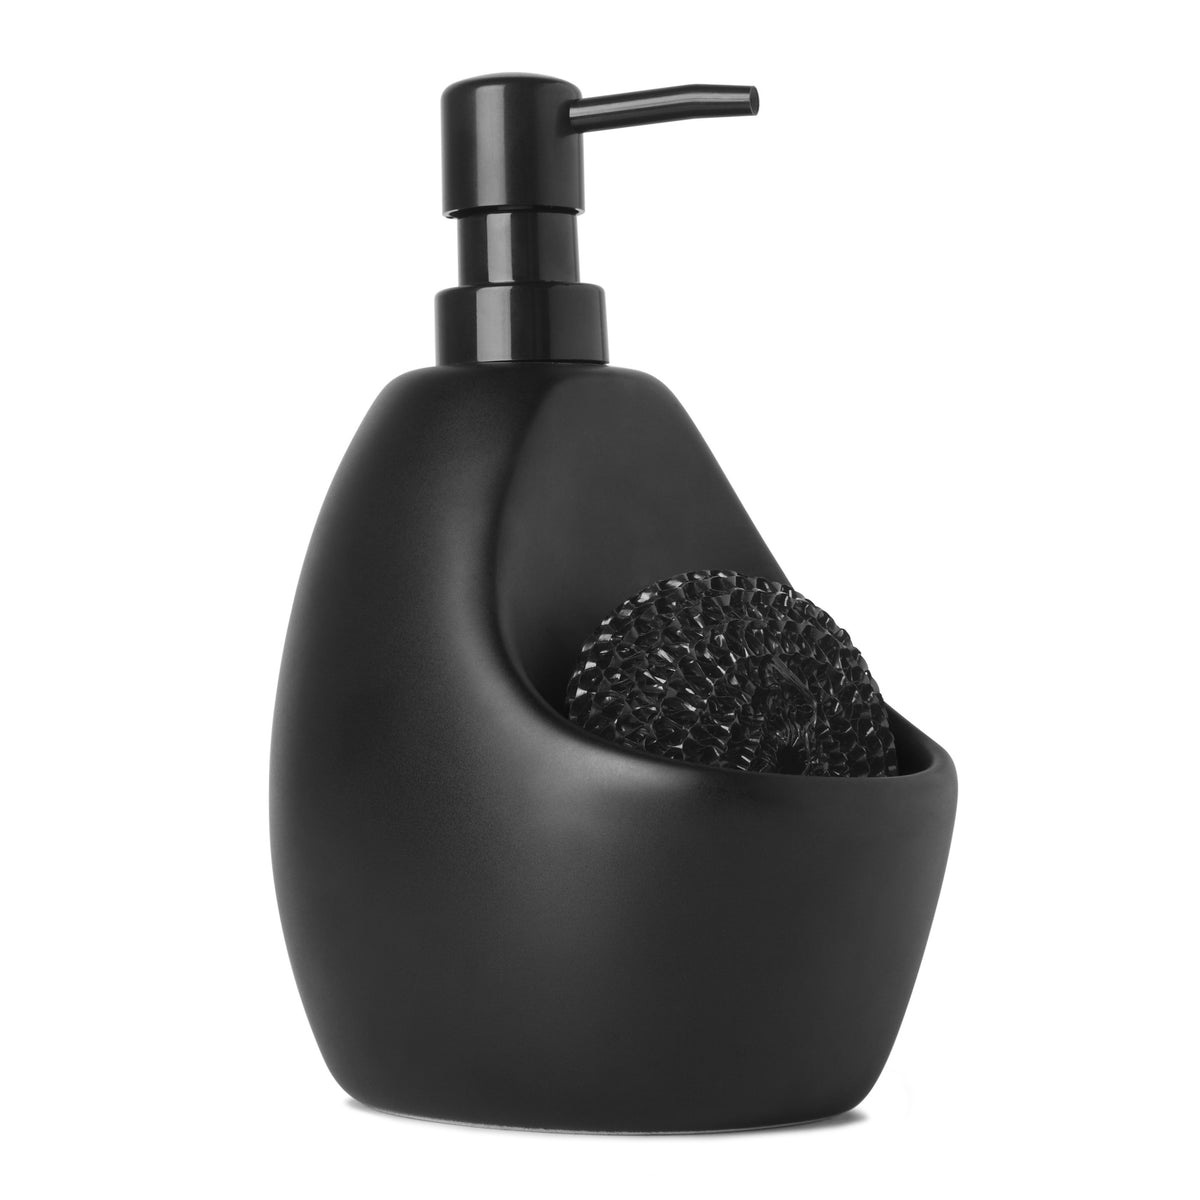 Dispensador de jabón de pared LINEA Zack - color negro - contenido 190 ml